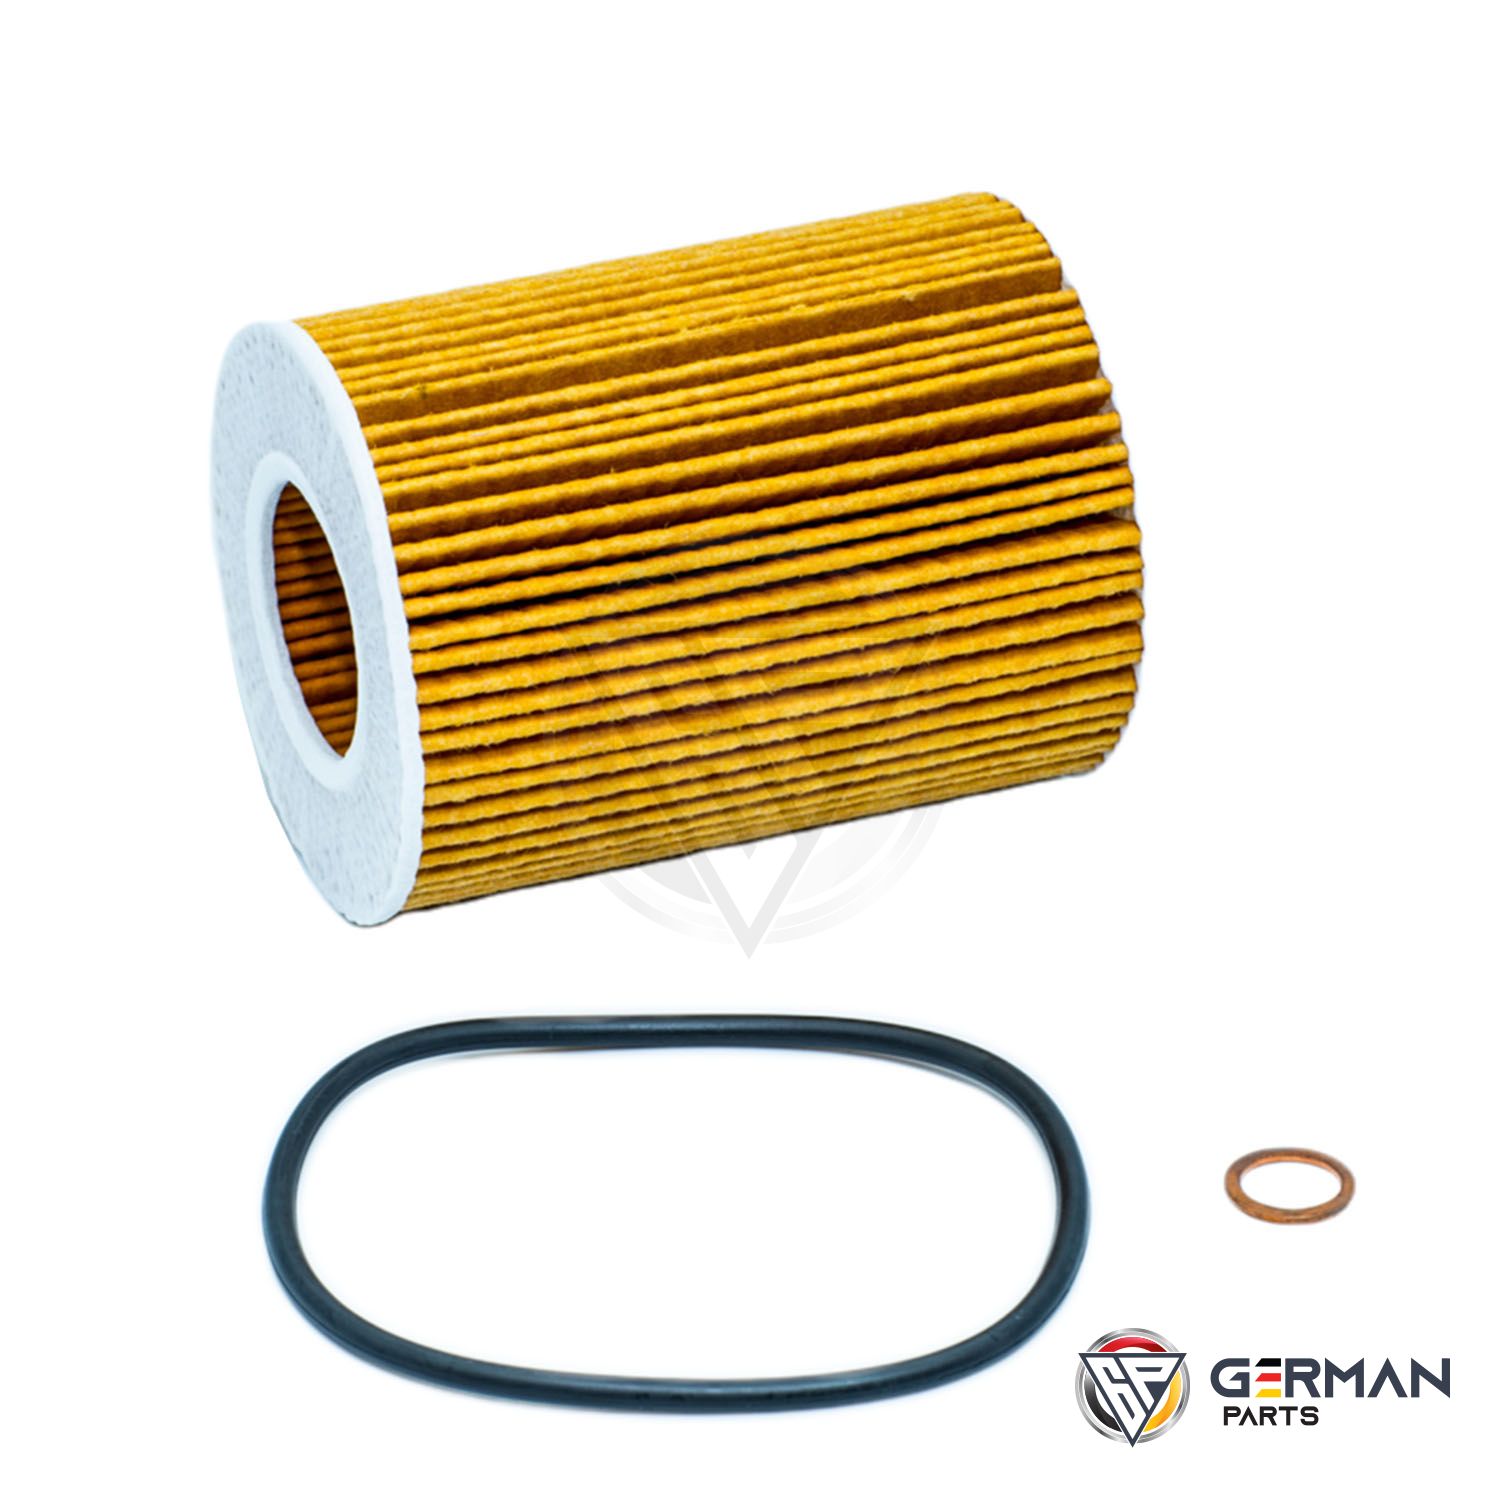 Buy Bosch Oil Filter 11427512300 - German Parts